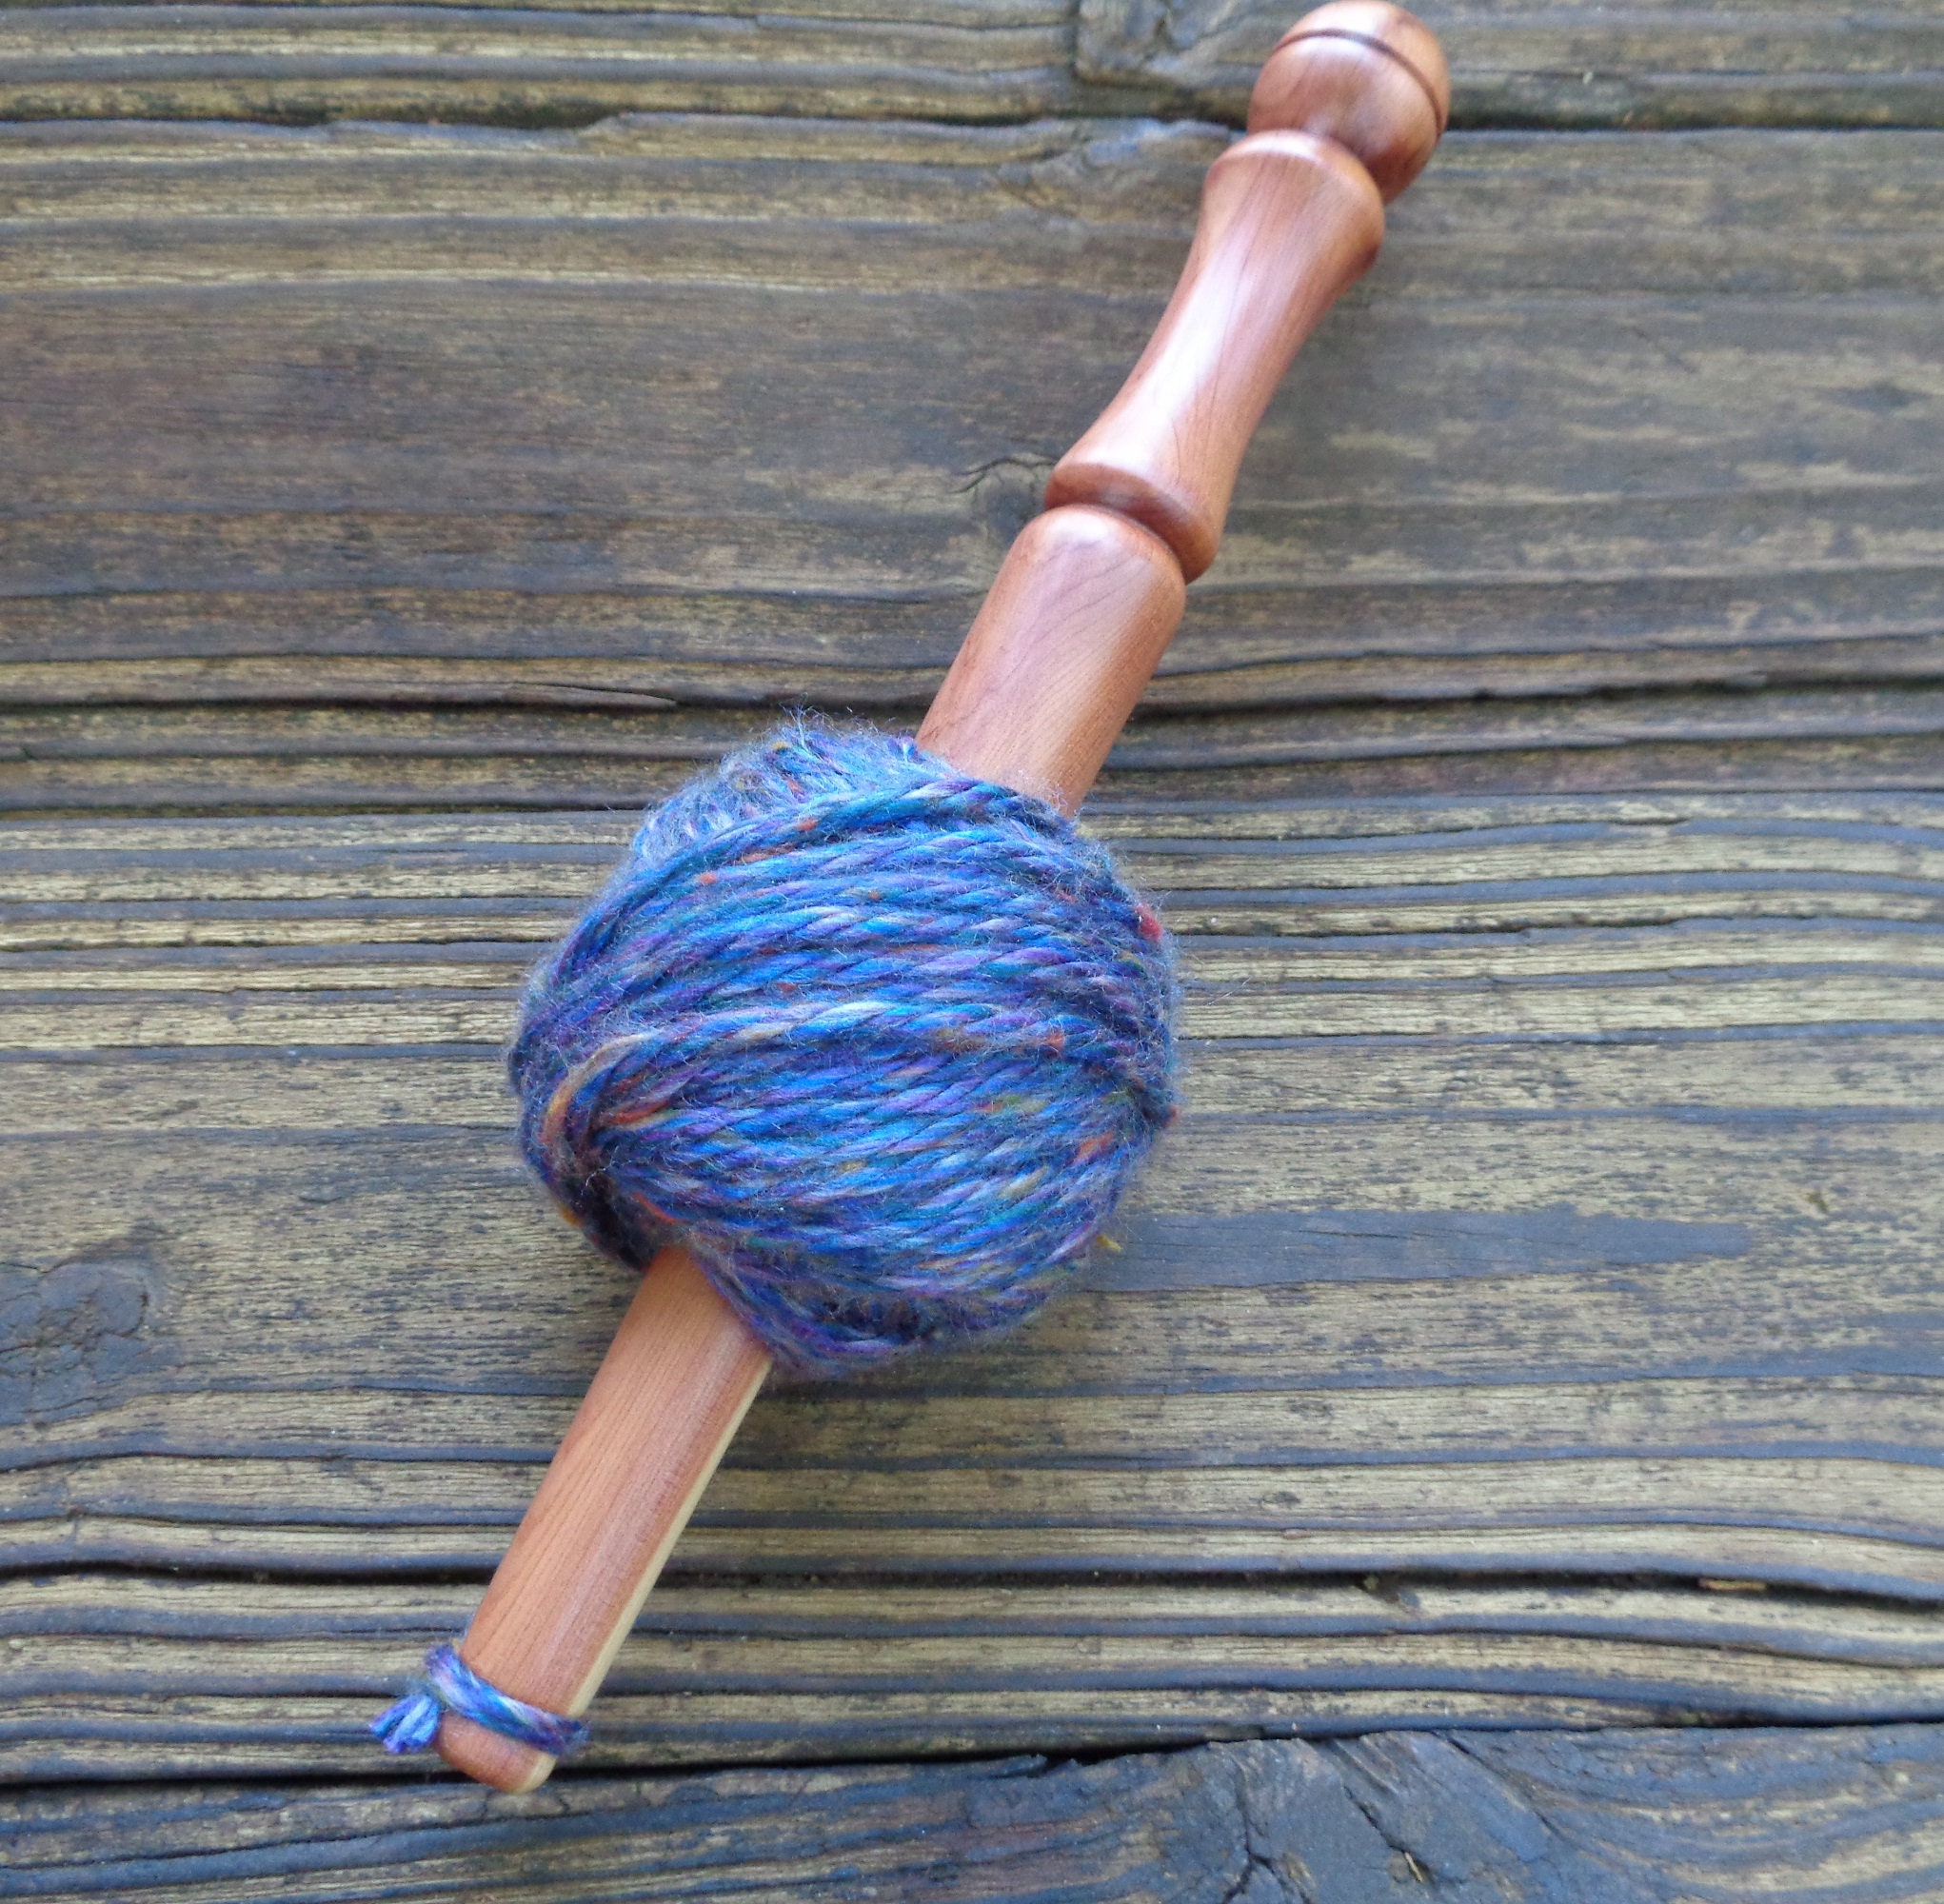 Yarn Ball Winder, Knitting Accessories